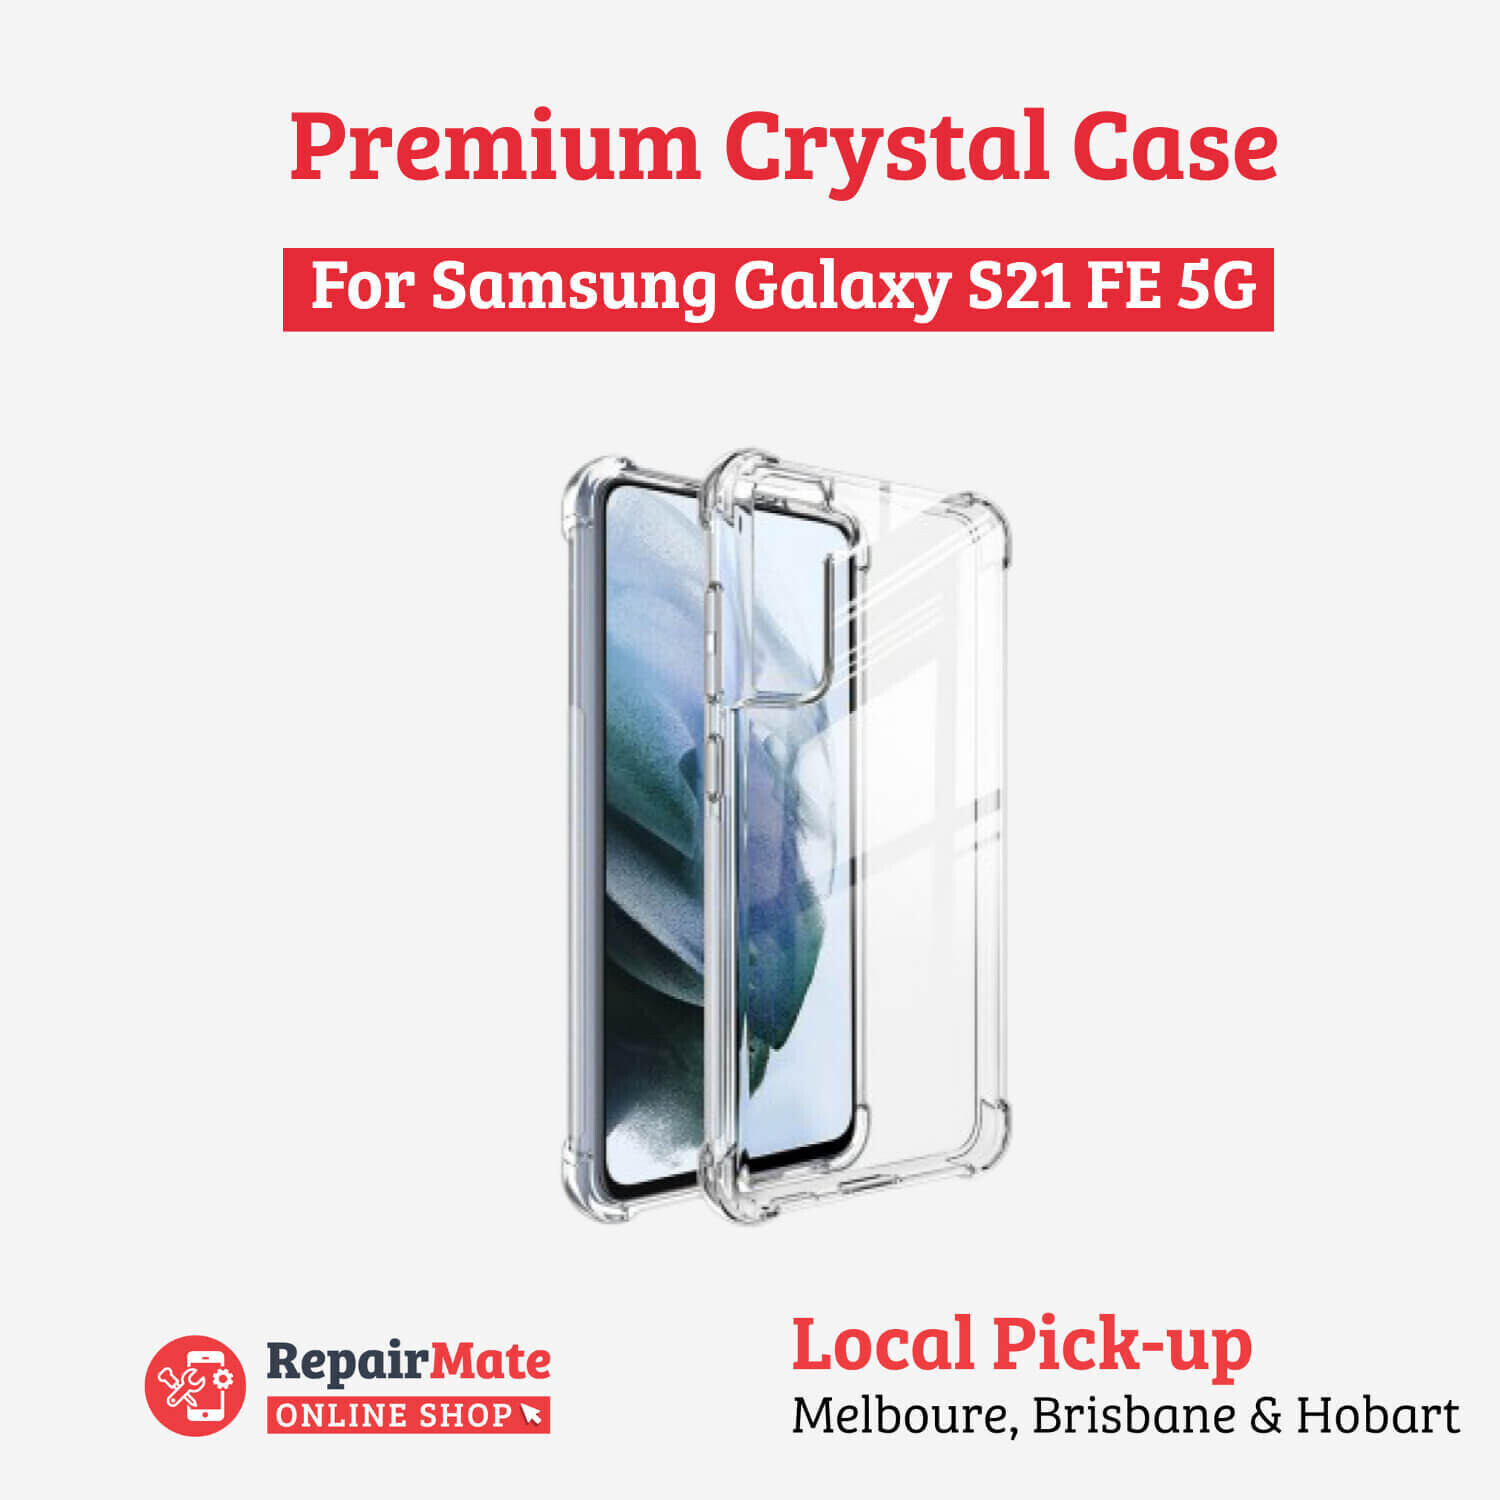 Samsung Galaxy S21 FE 5G Premium Crystal Case